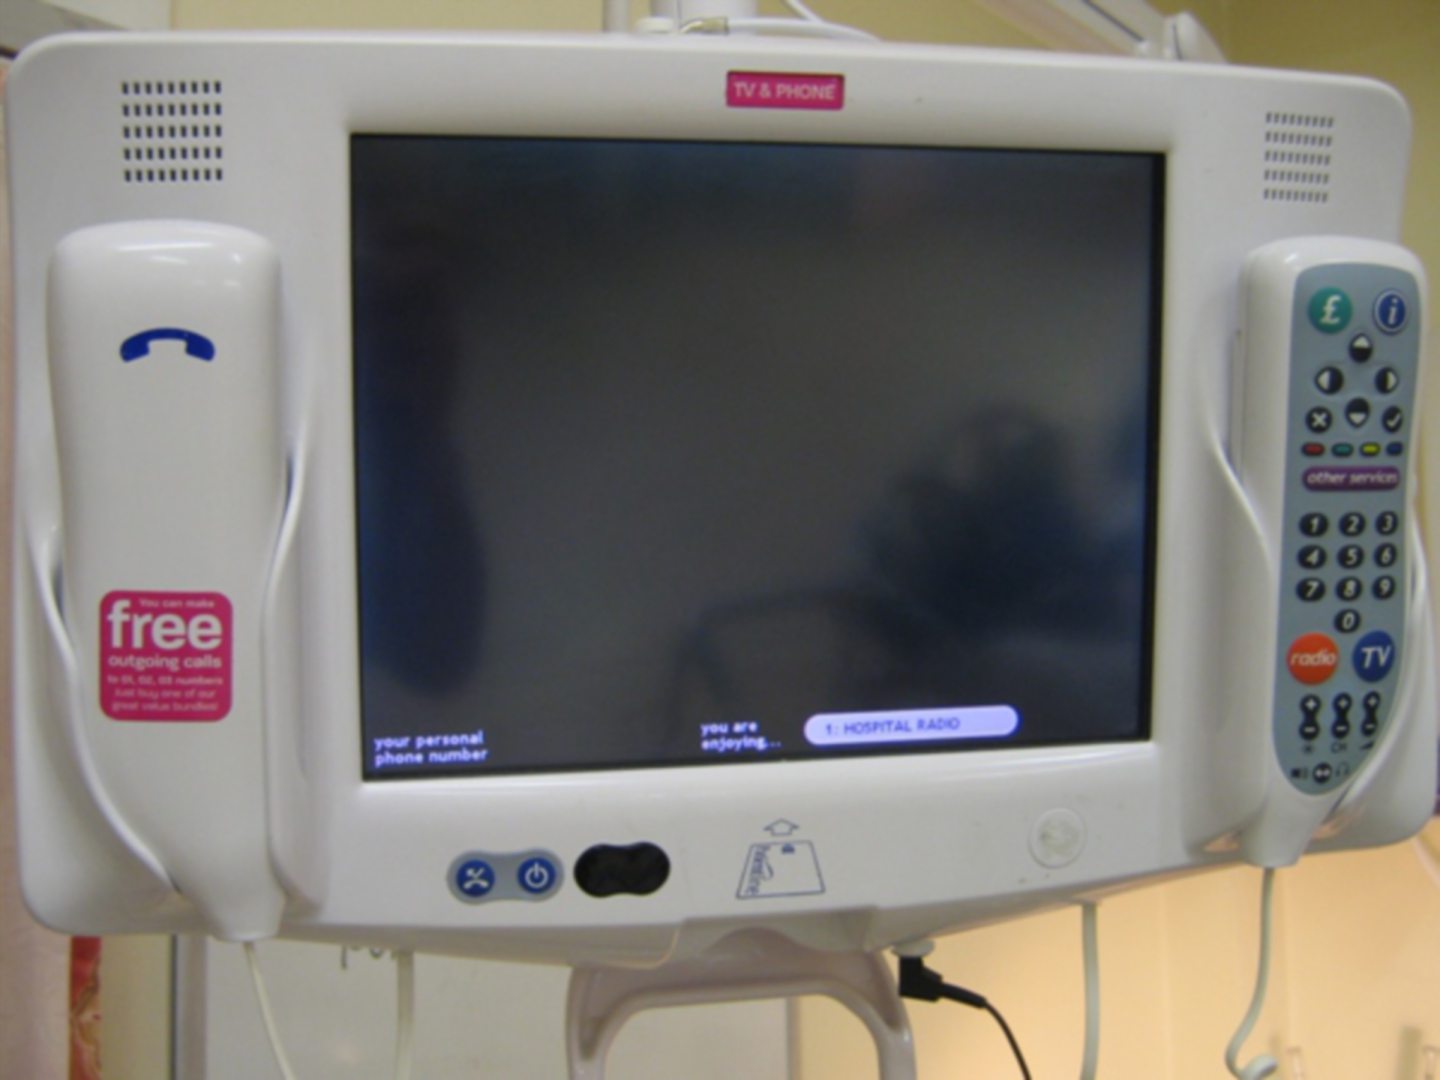 Hospedia patient television and phone set.